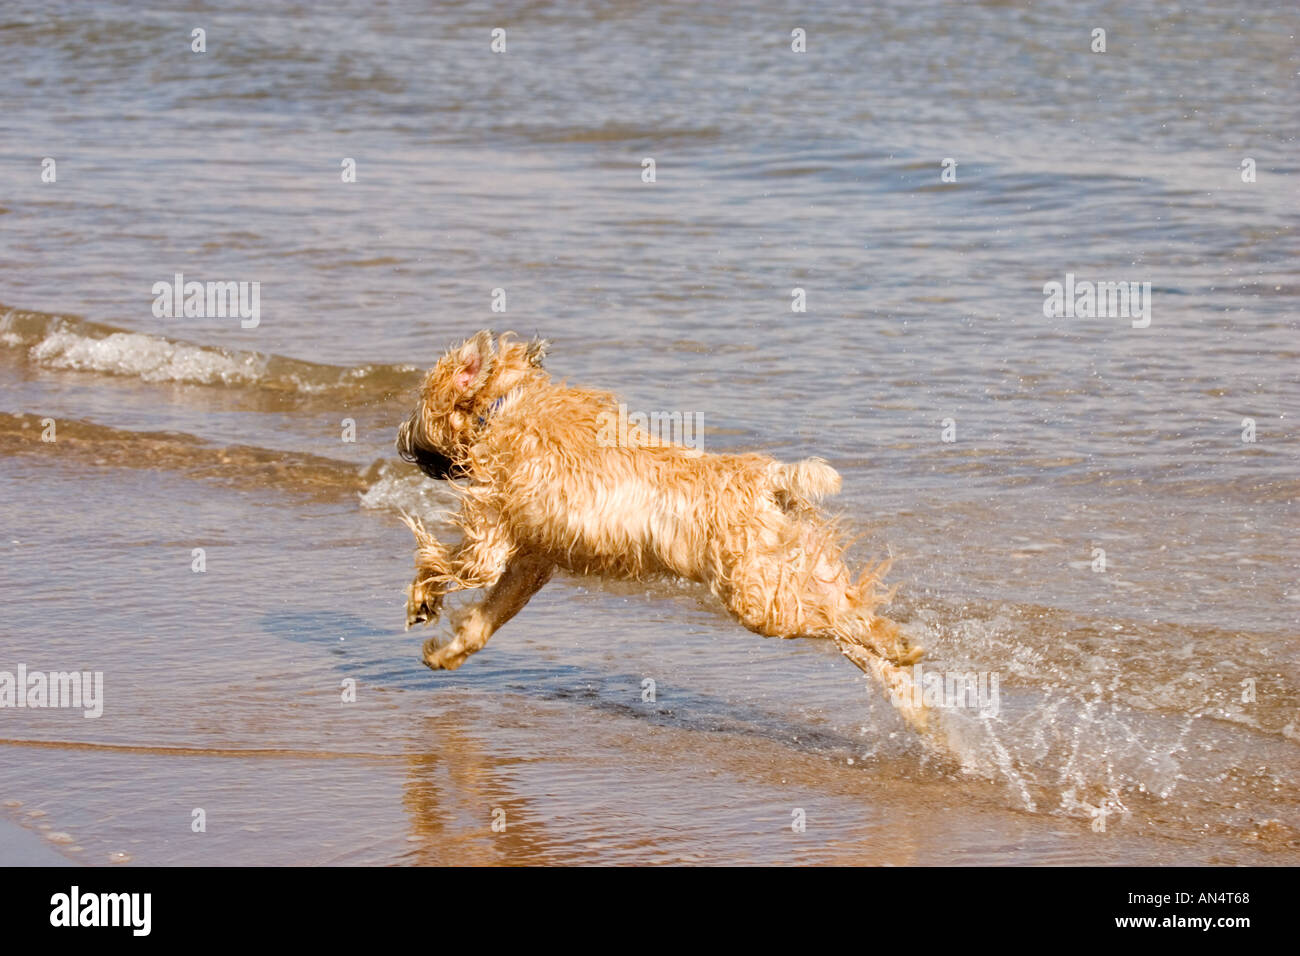 Dog Soft Coated Wheaten Terrier running through water on beach Stock Photo